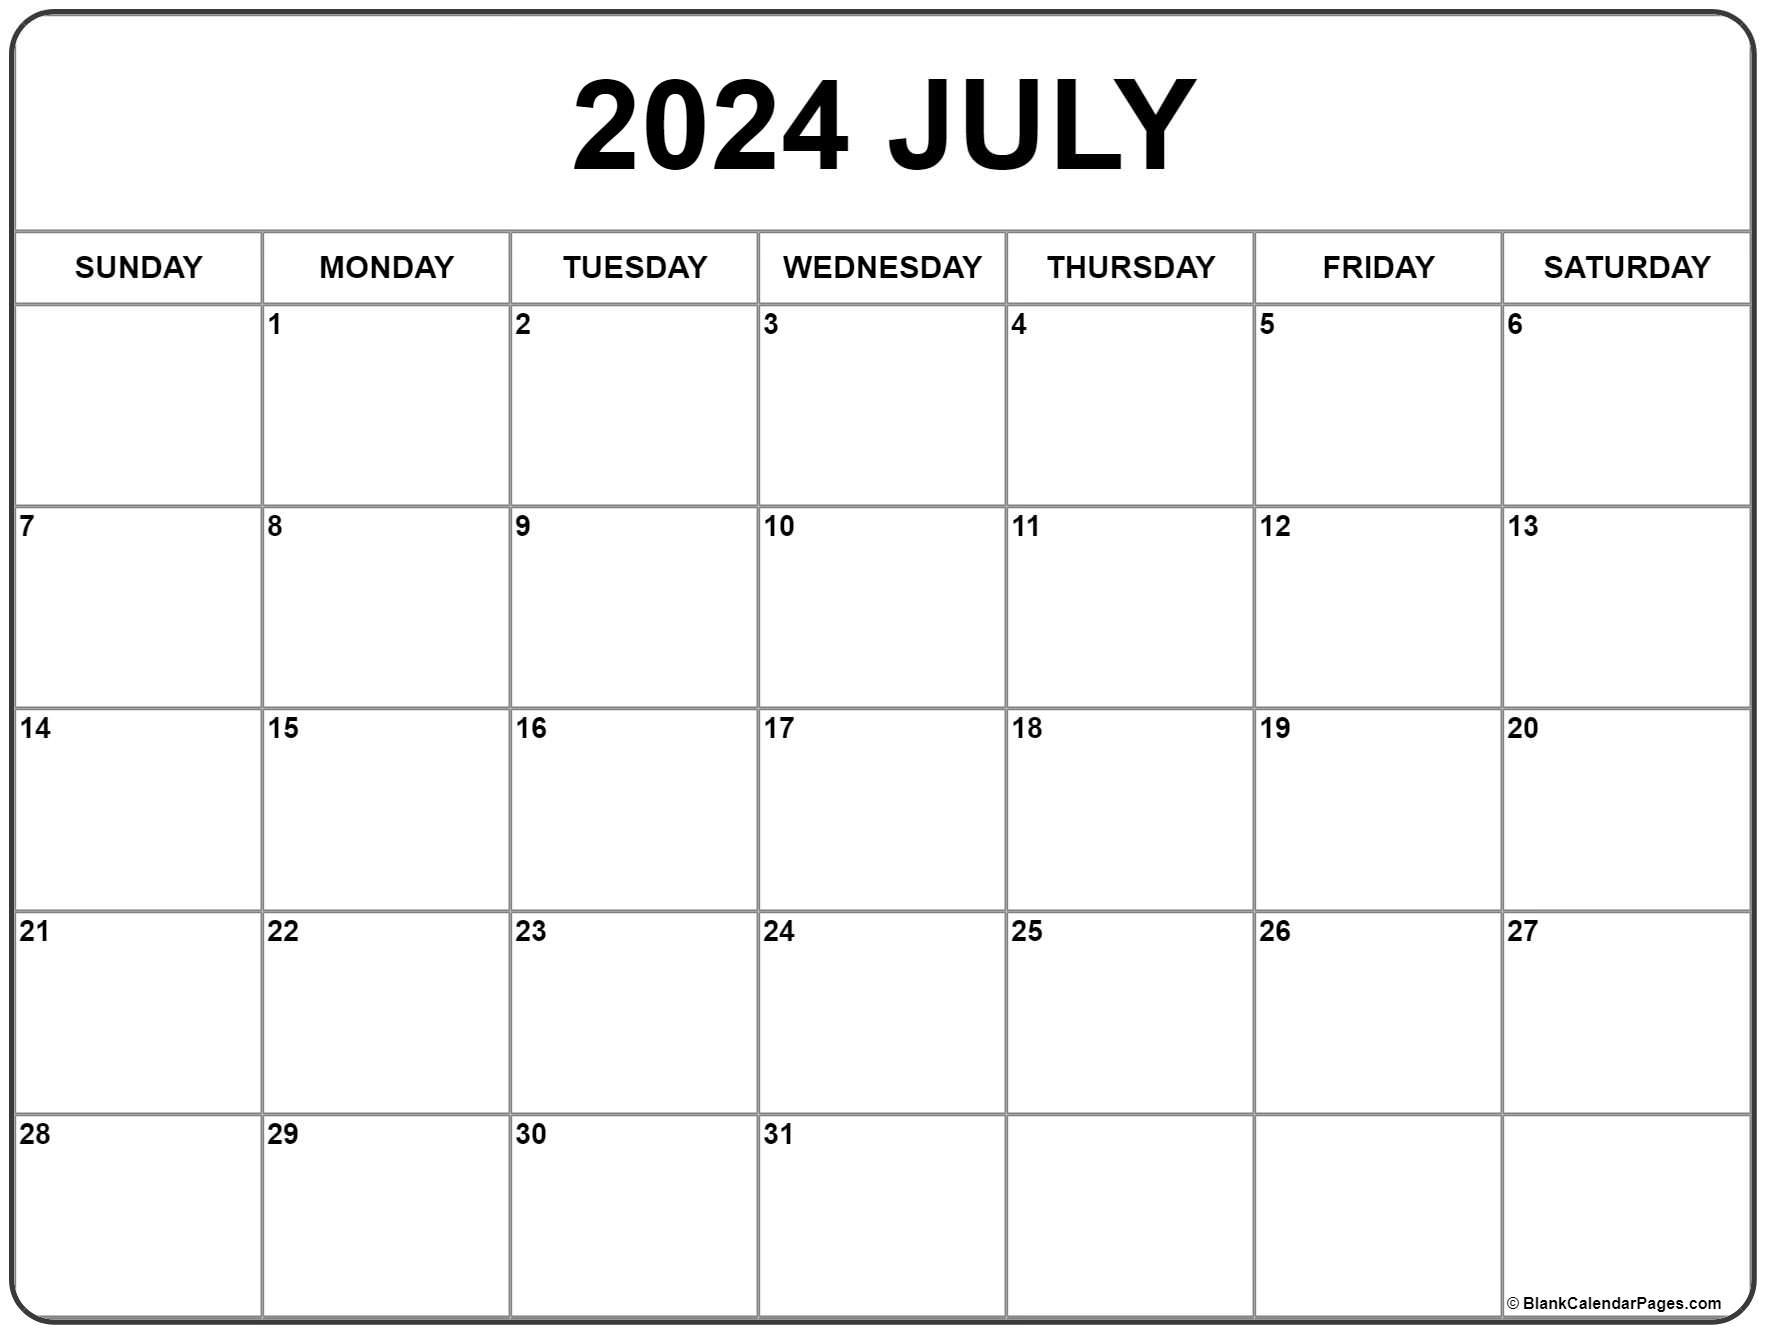 July 2024 Calendar | Free Printable Calendar intended for Blank Calendar Page July 2024